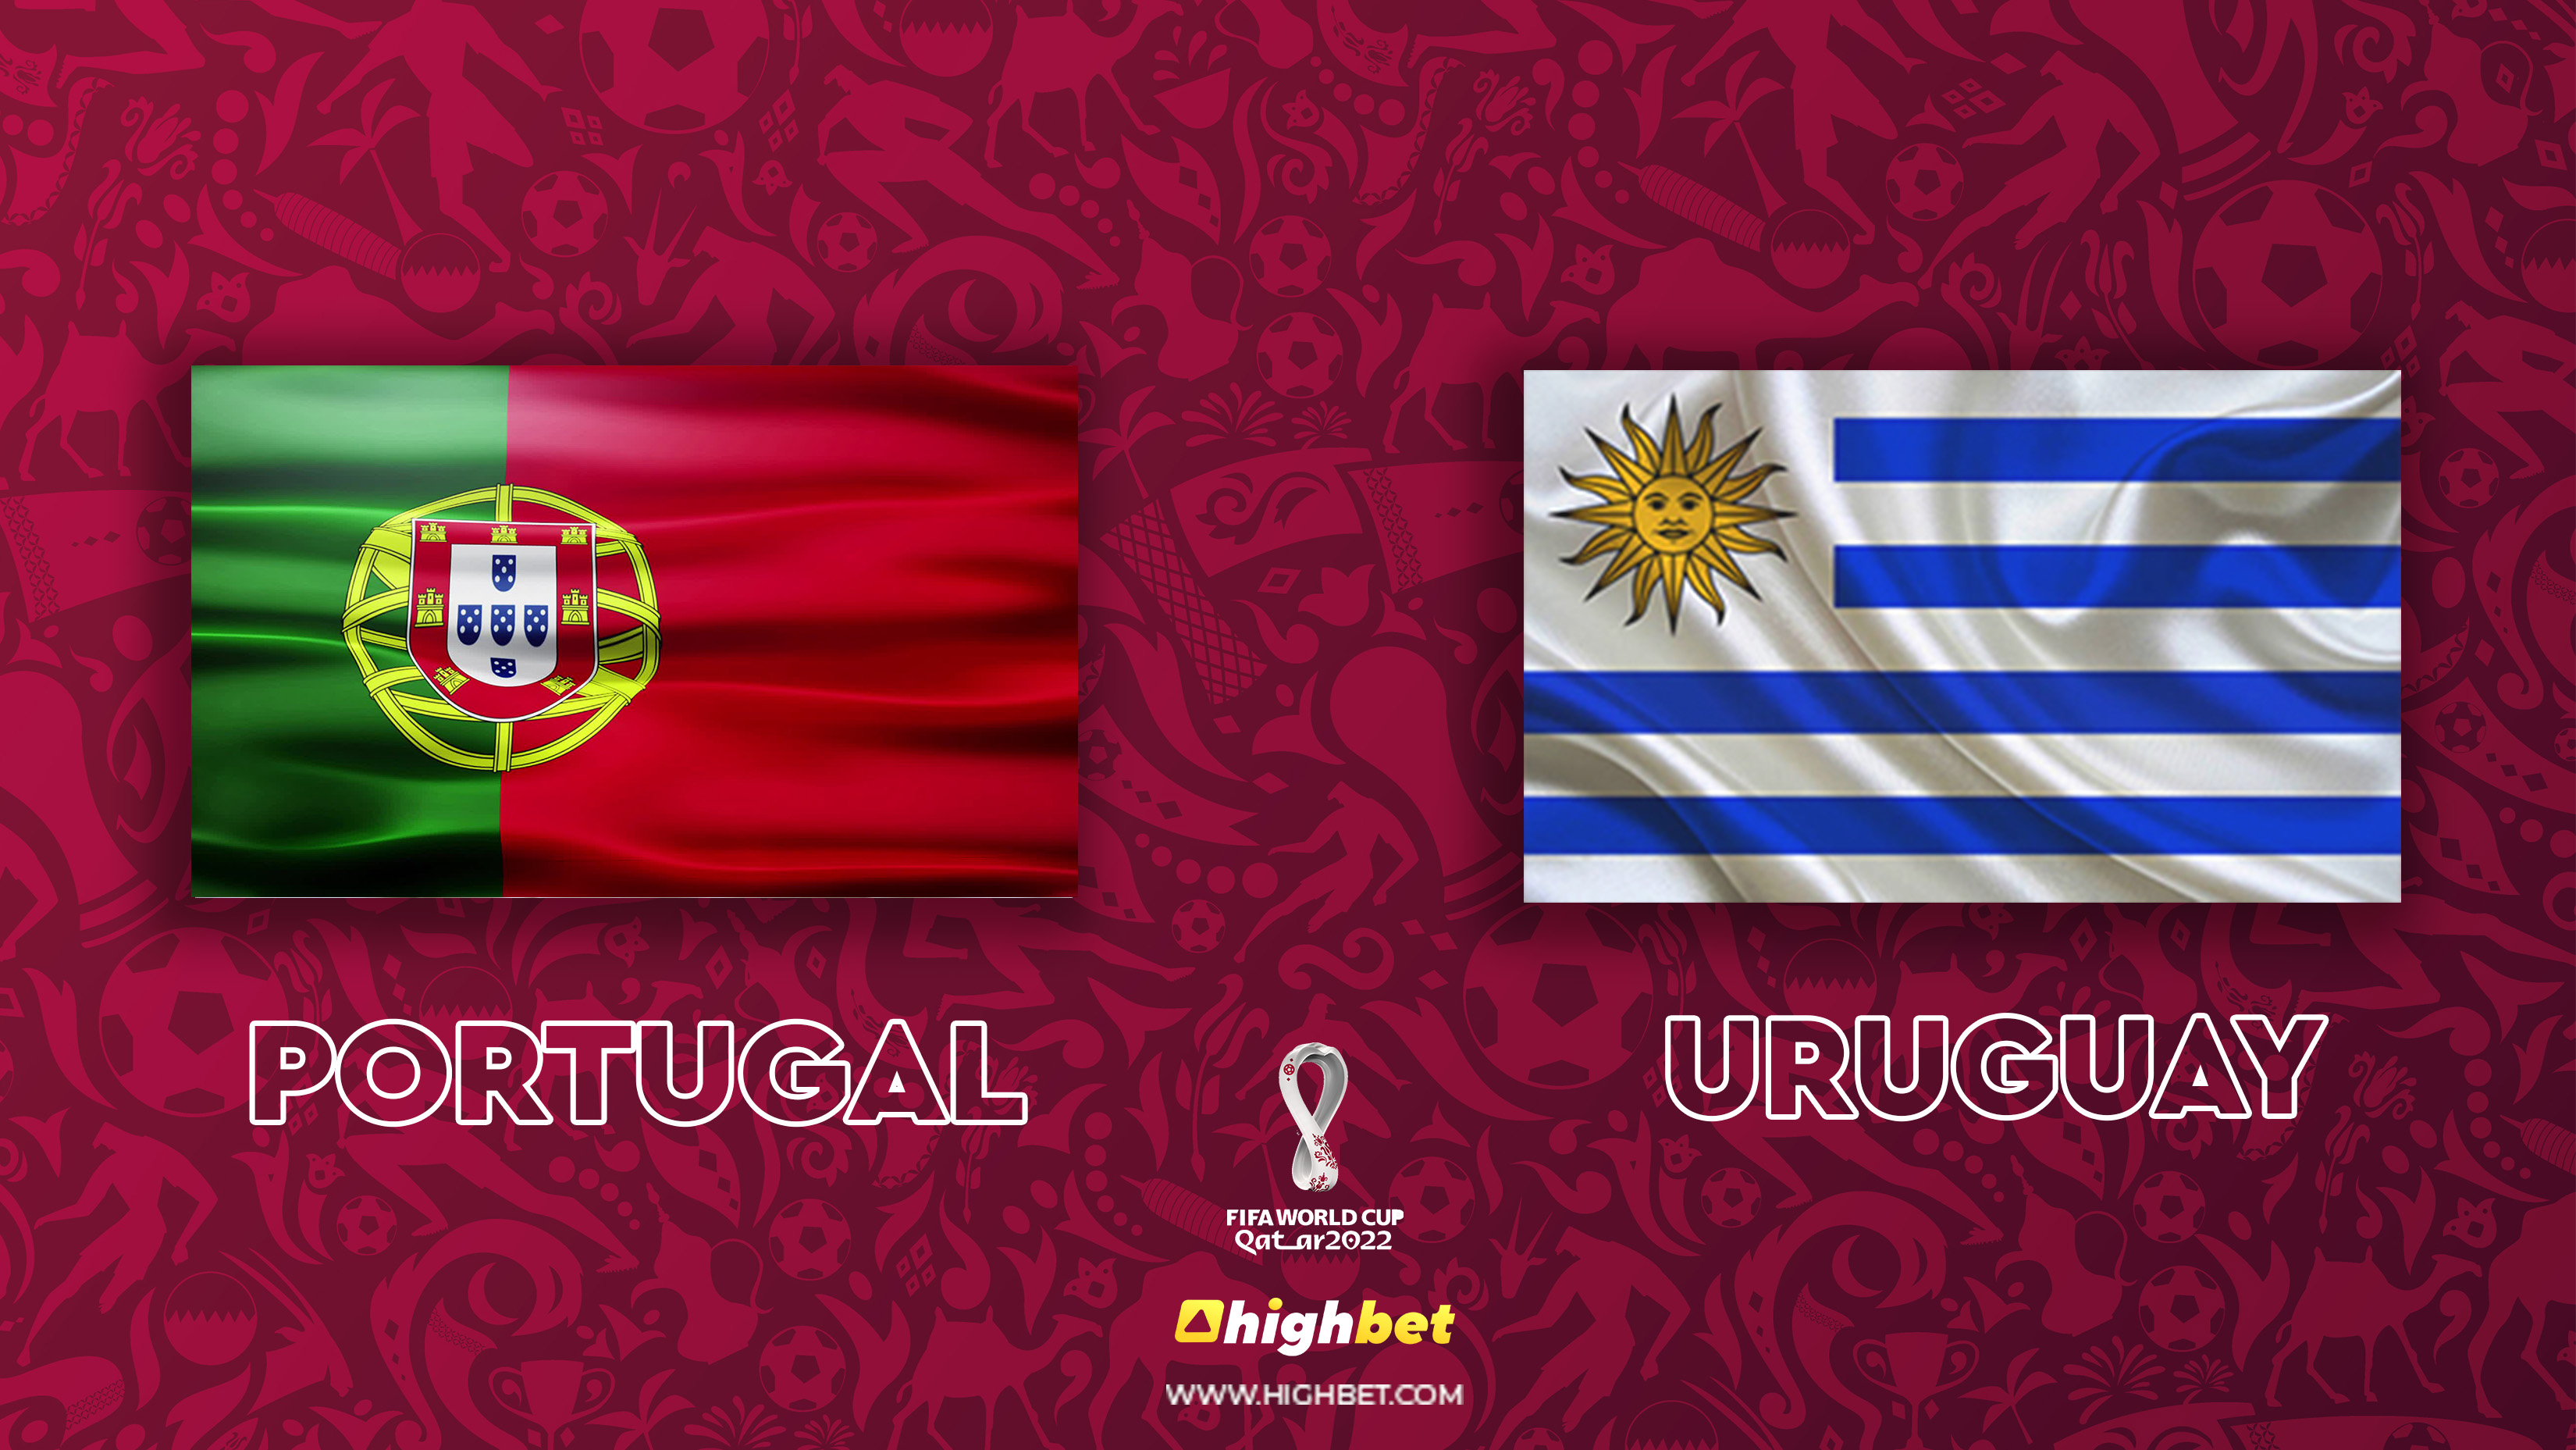 Portugal vs Uruguay - highbet World Cup 2022 Pre-Match Analysis